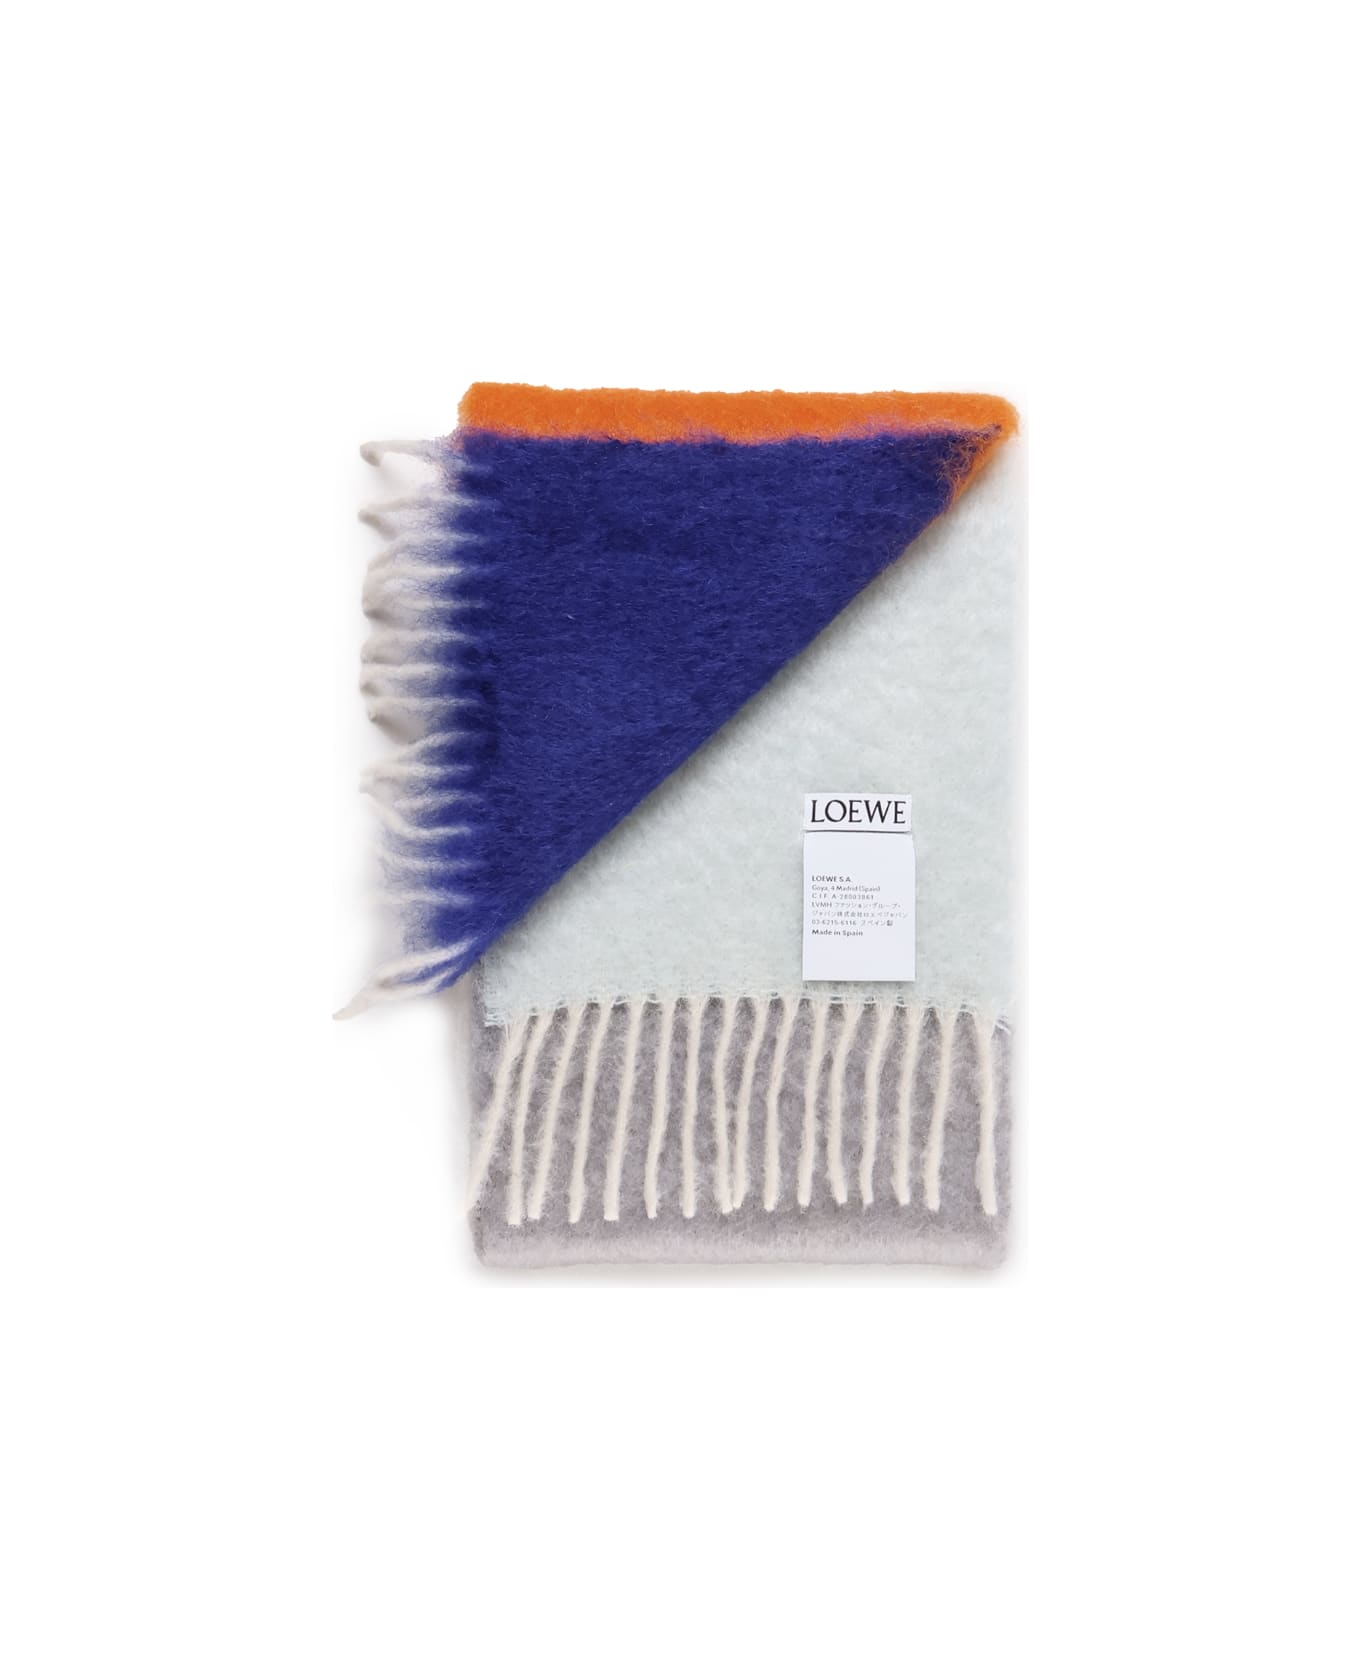 Loewe Wool And Mohair Striped Scarf - Blue, orange, grey